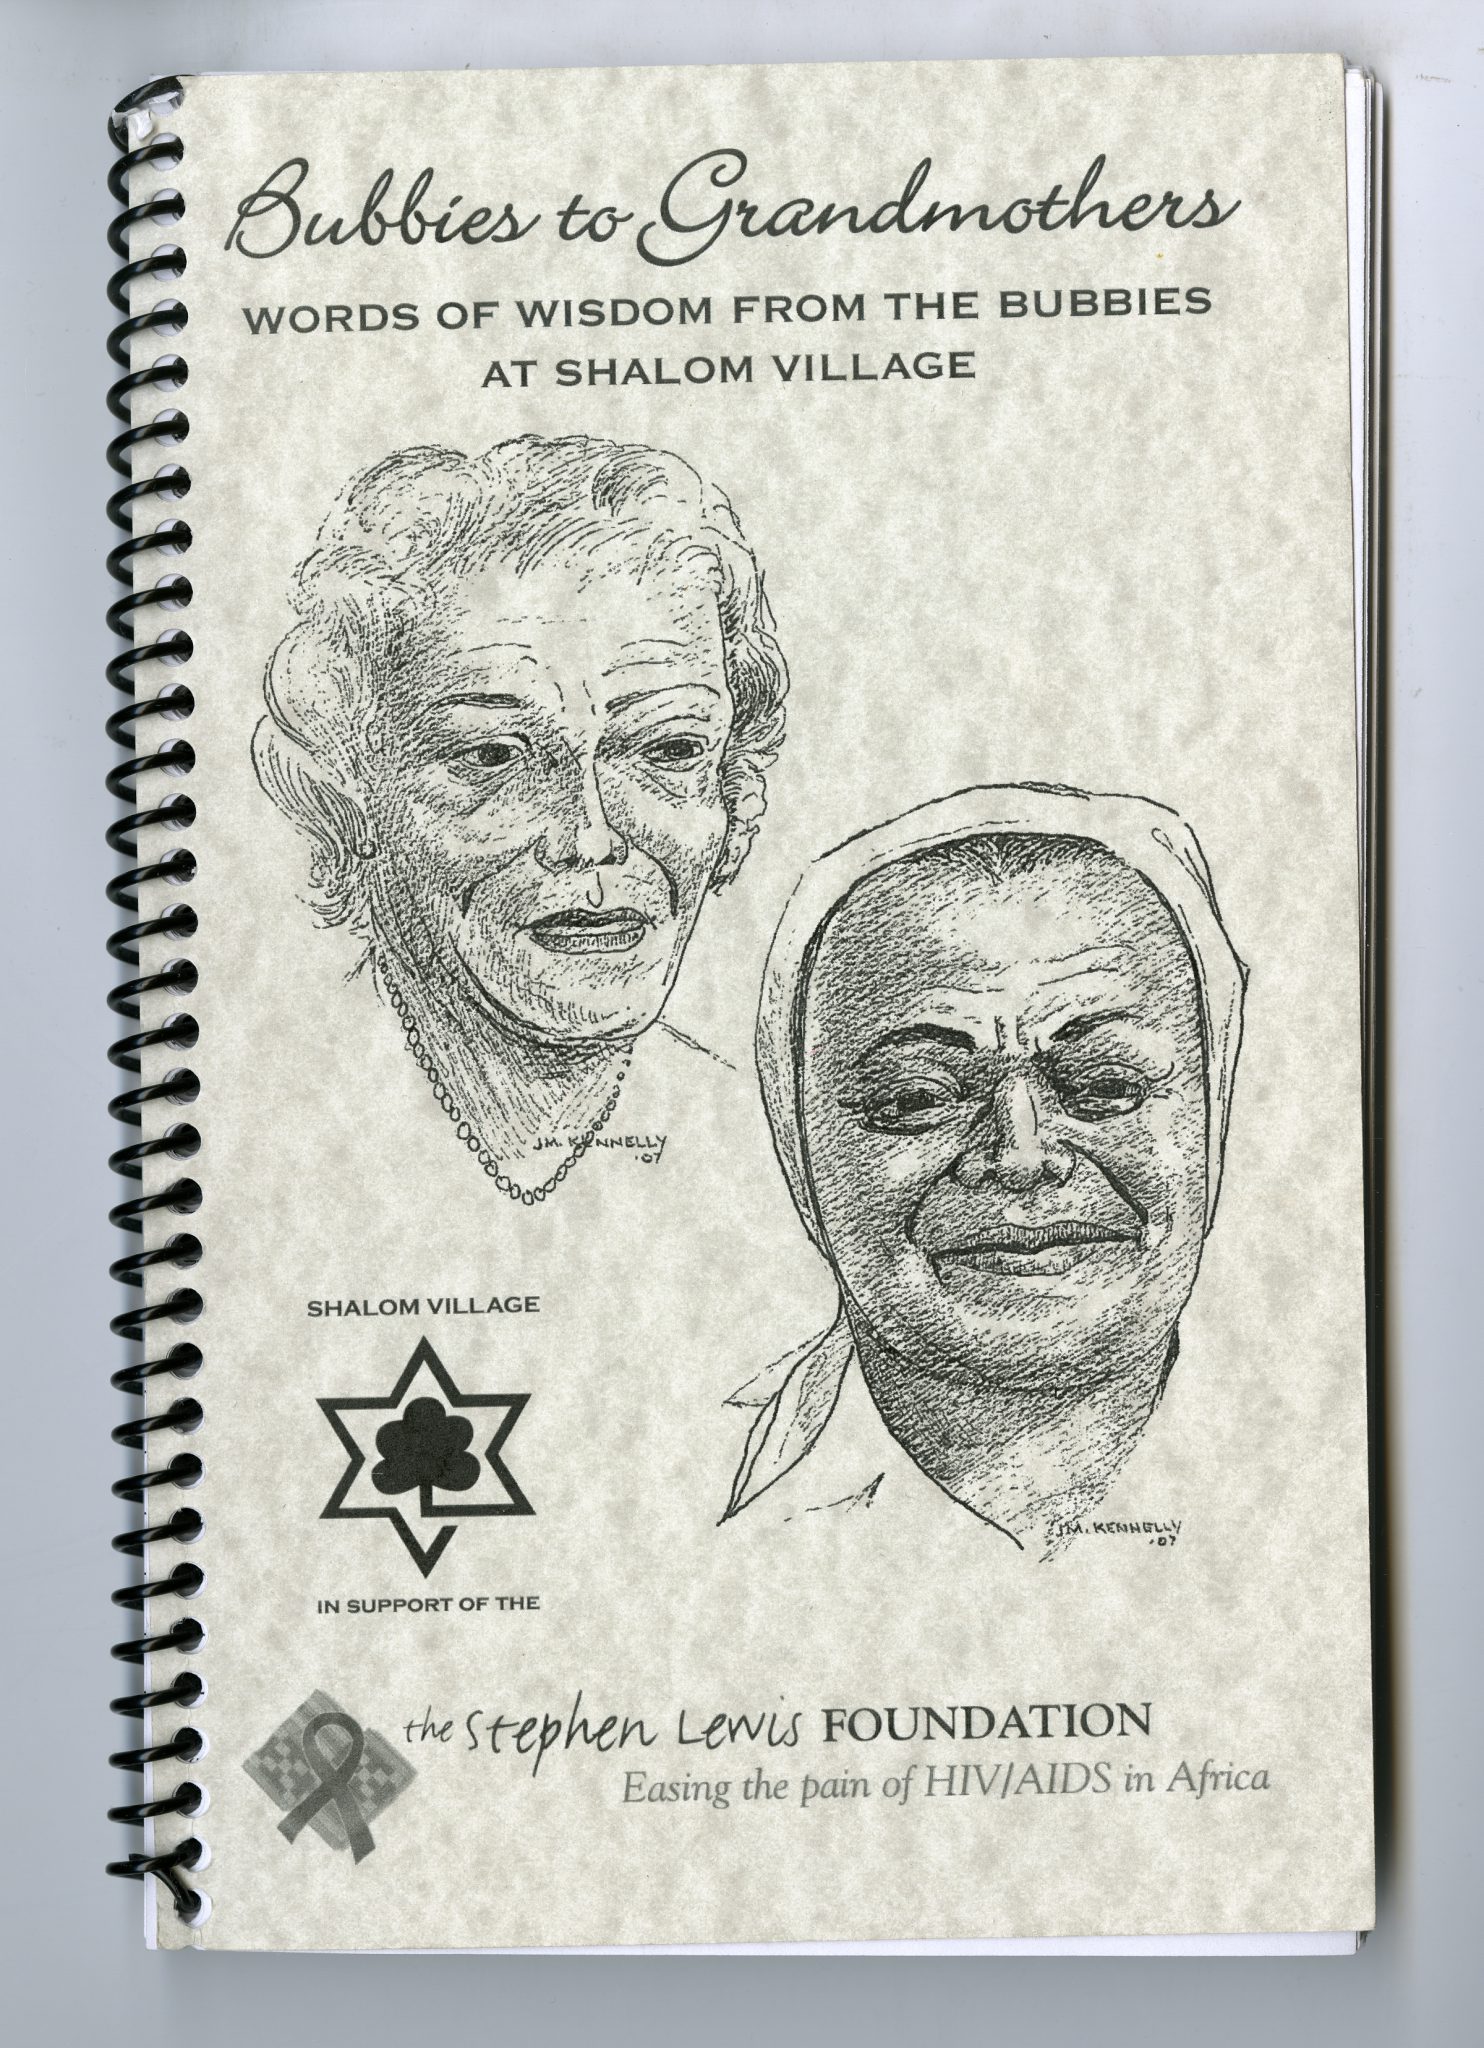 Shalom Village journal